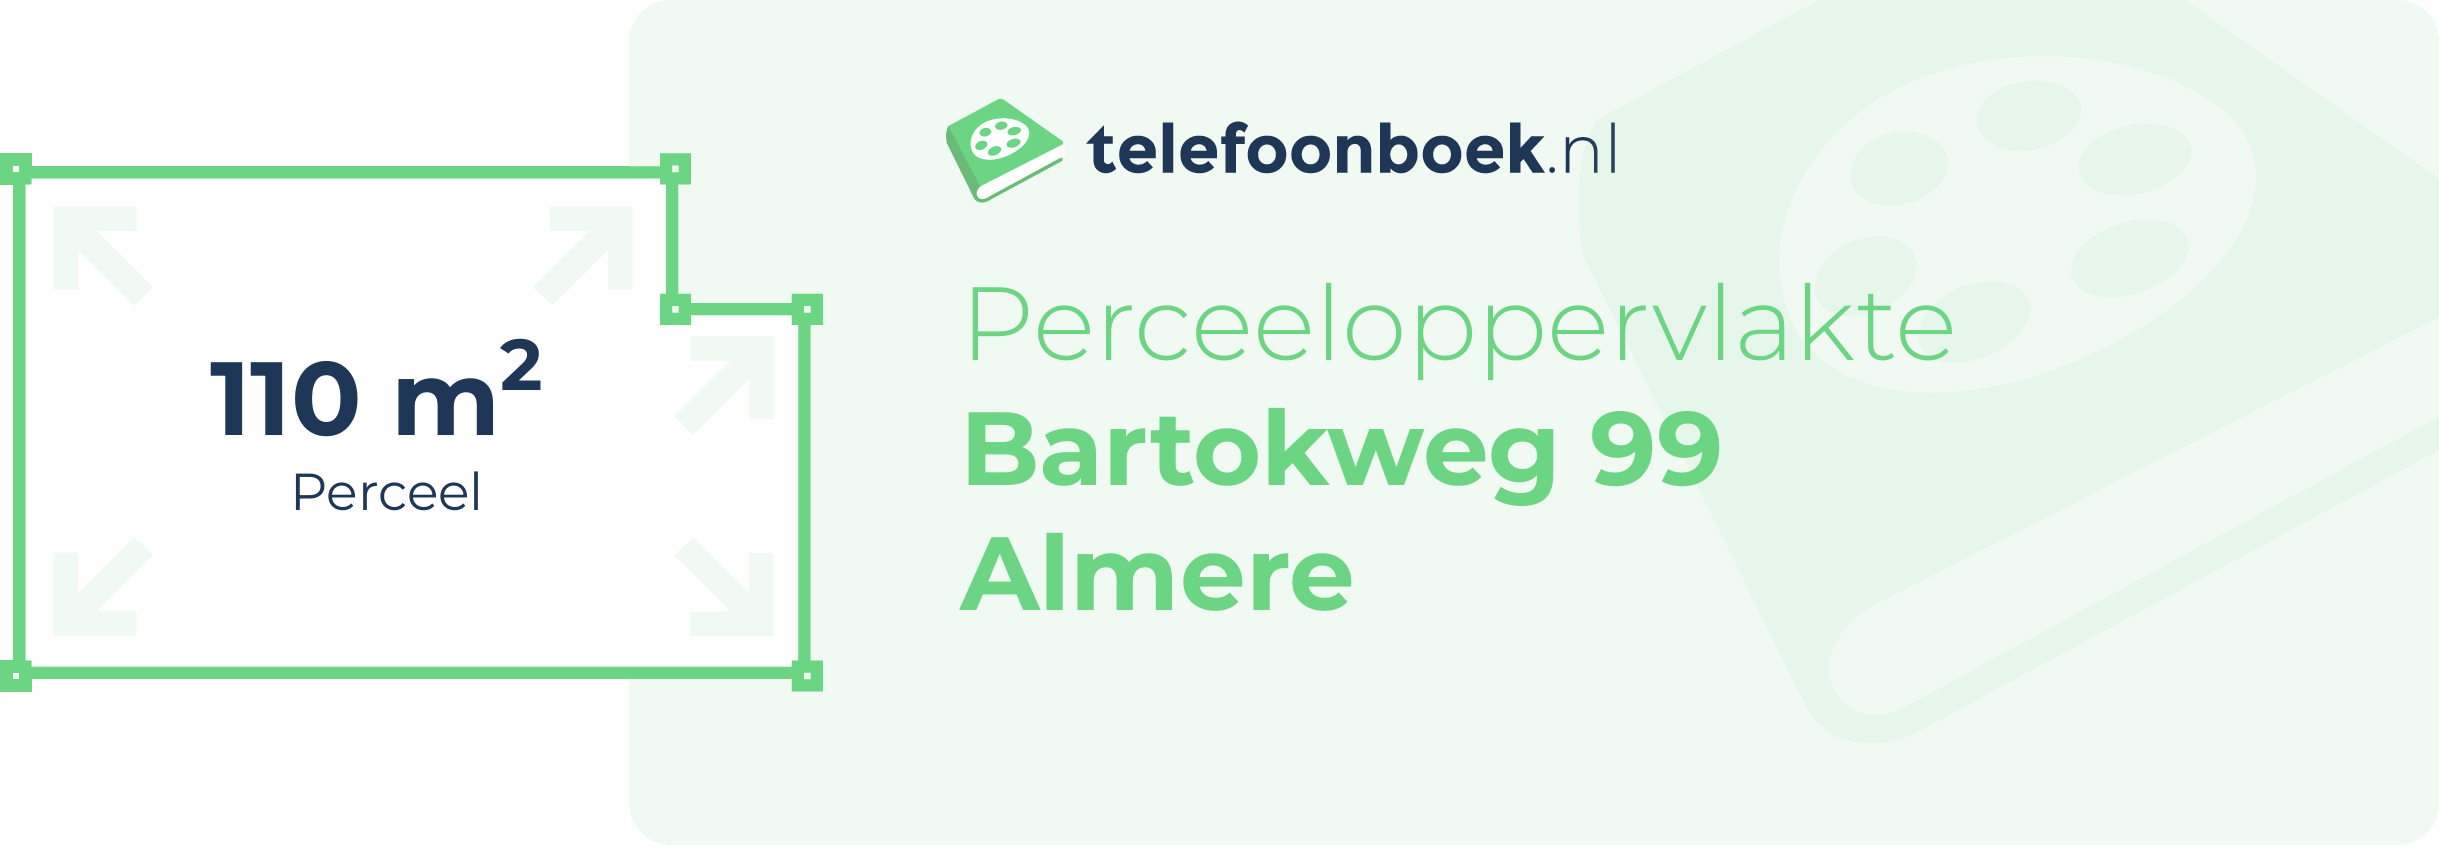 Perceeloppervlakte Bartokweg 99 Almere